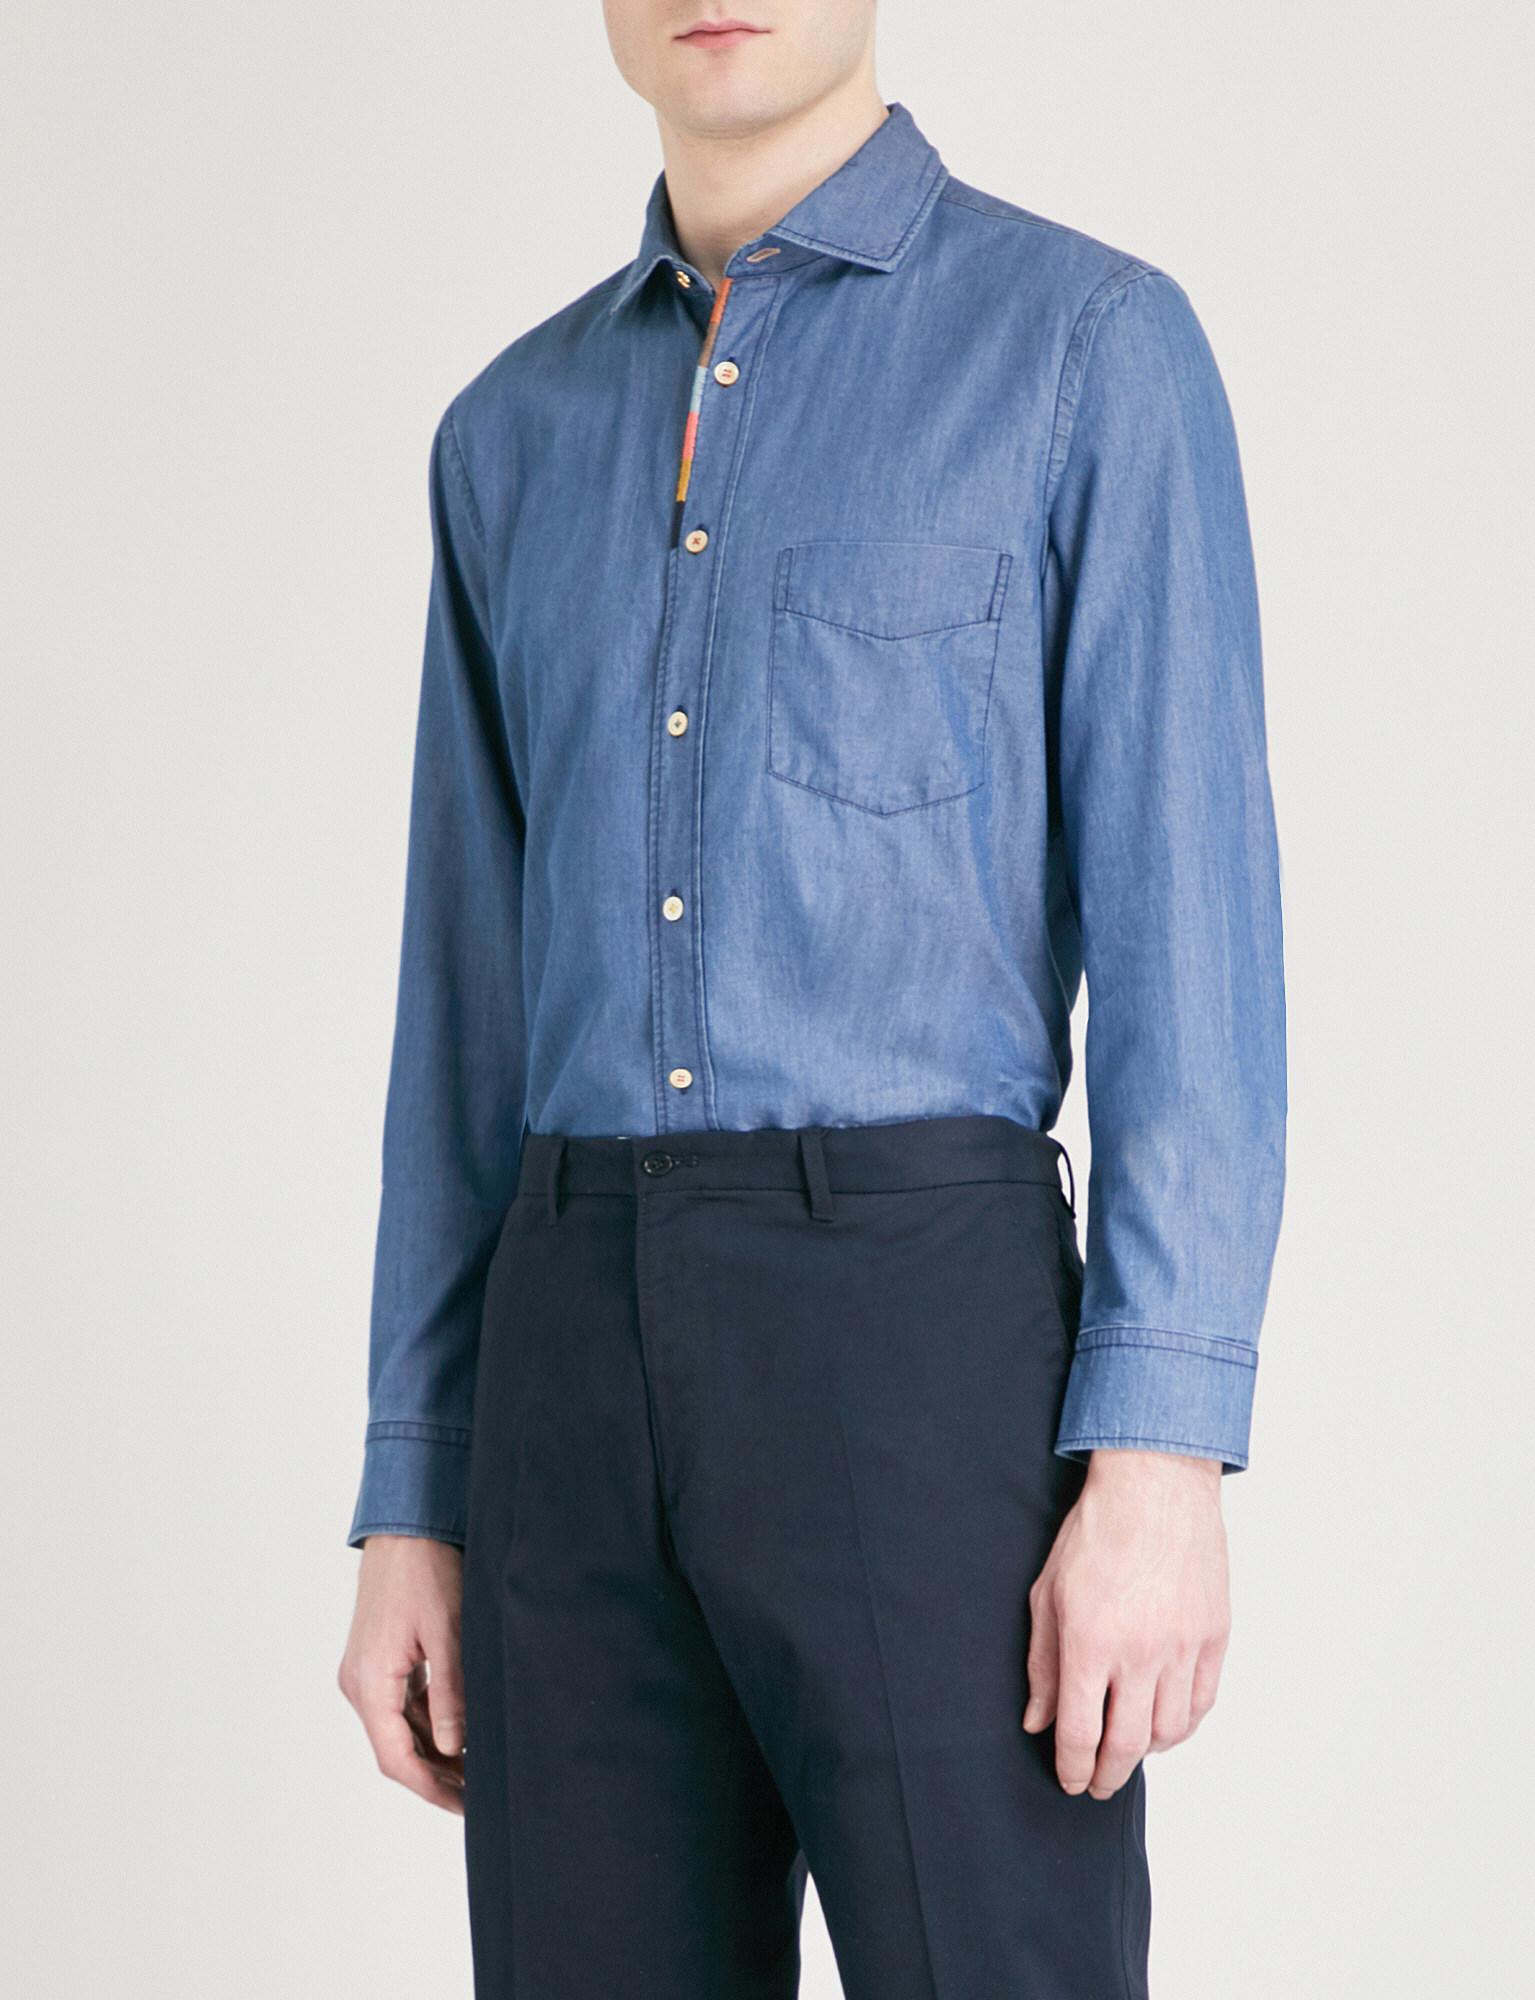 Paul Smith Artist Stripe Regular-fit Denim Shirt in Indigo (Blue 